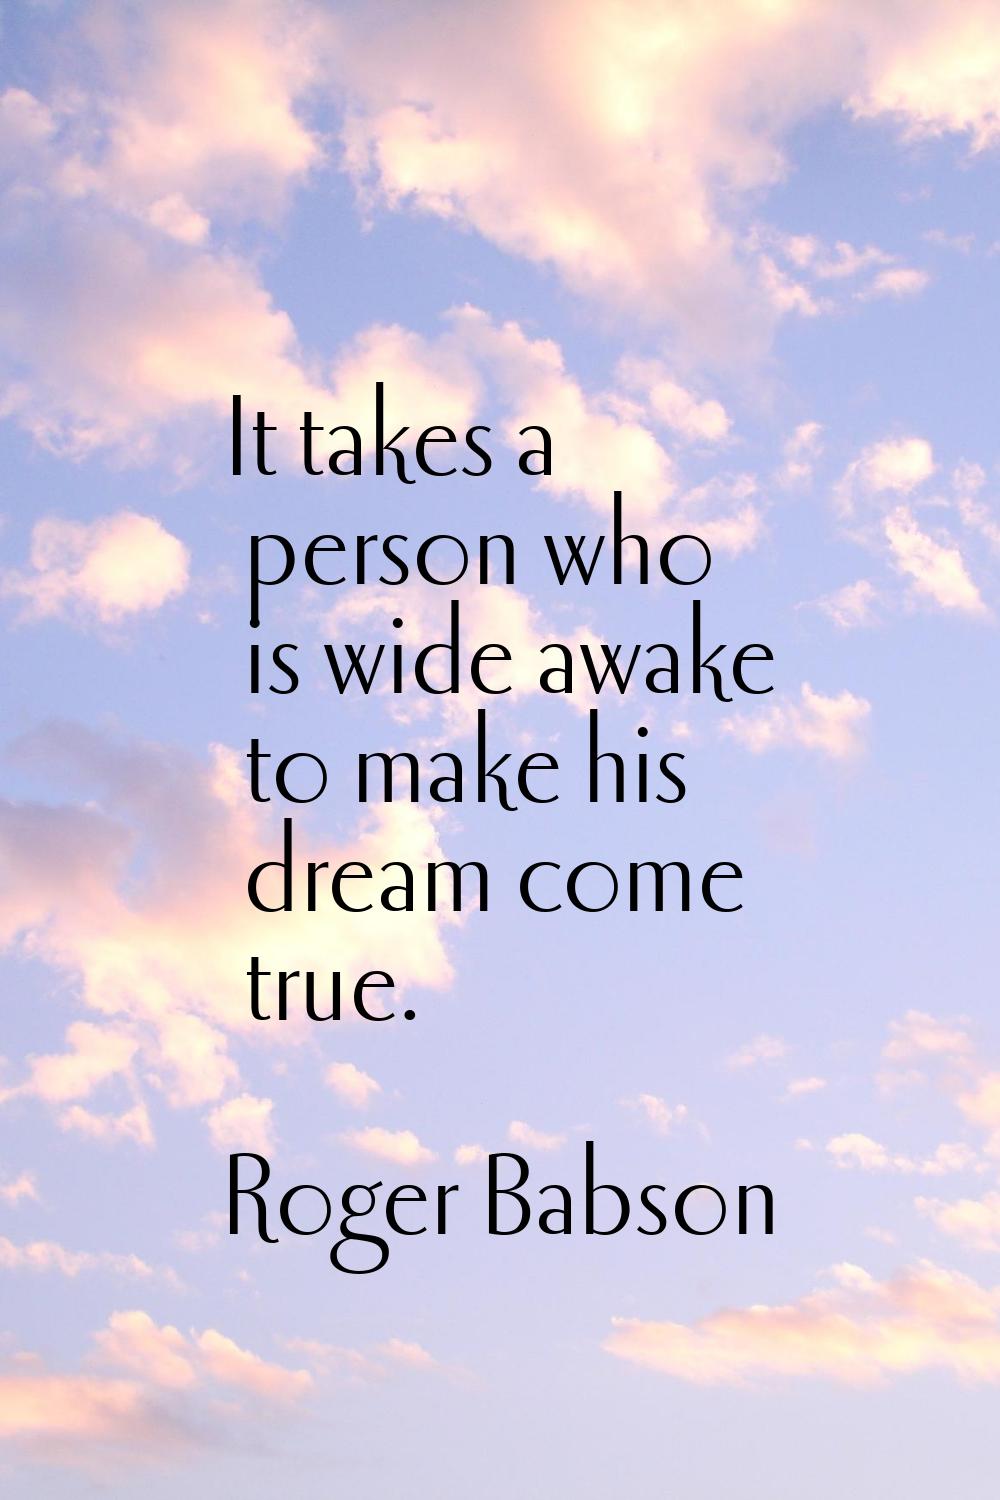 It takes a person who is wide awake to make his dream come true.